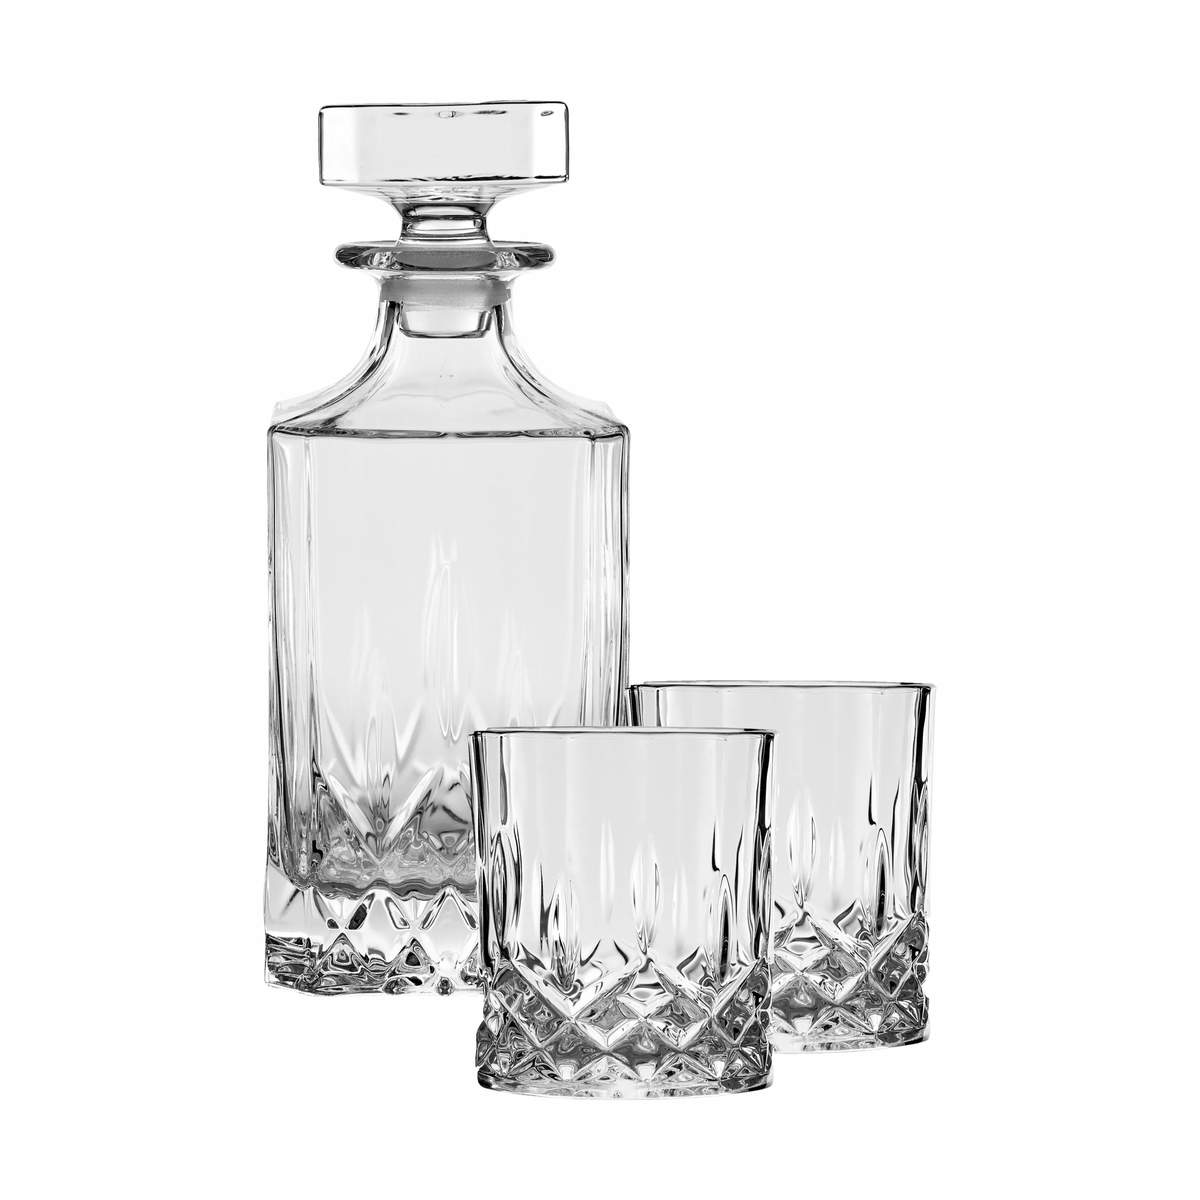 kantsten Klan stressende Lyngby Glas - Lounge Whiskysæt - 3 dele - 31/75 cl - Krystalglas - Klar |  Imerco